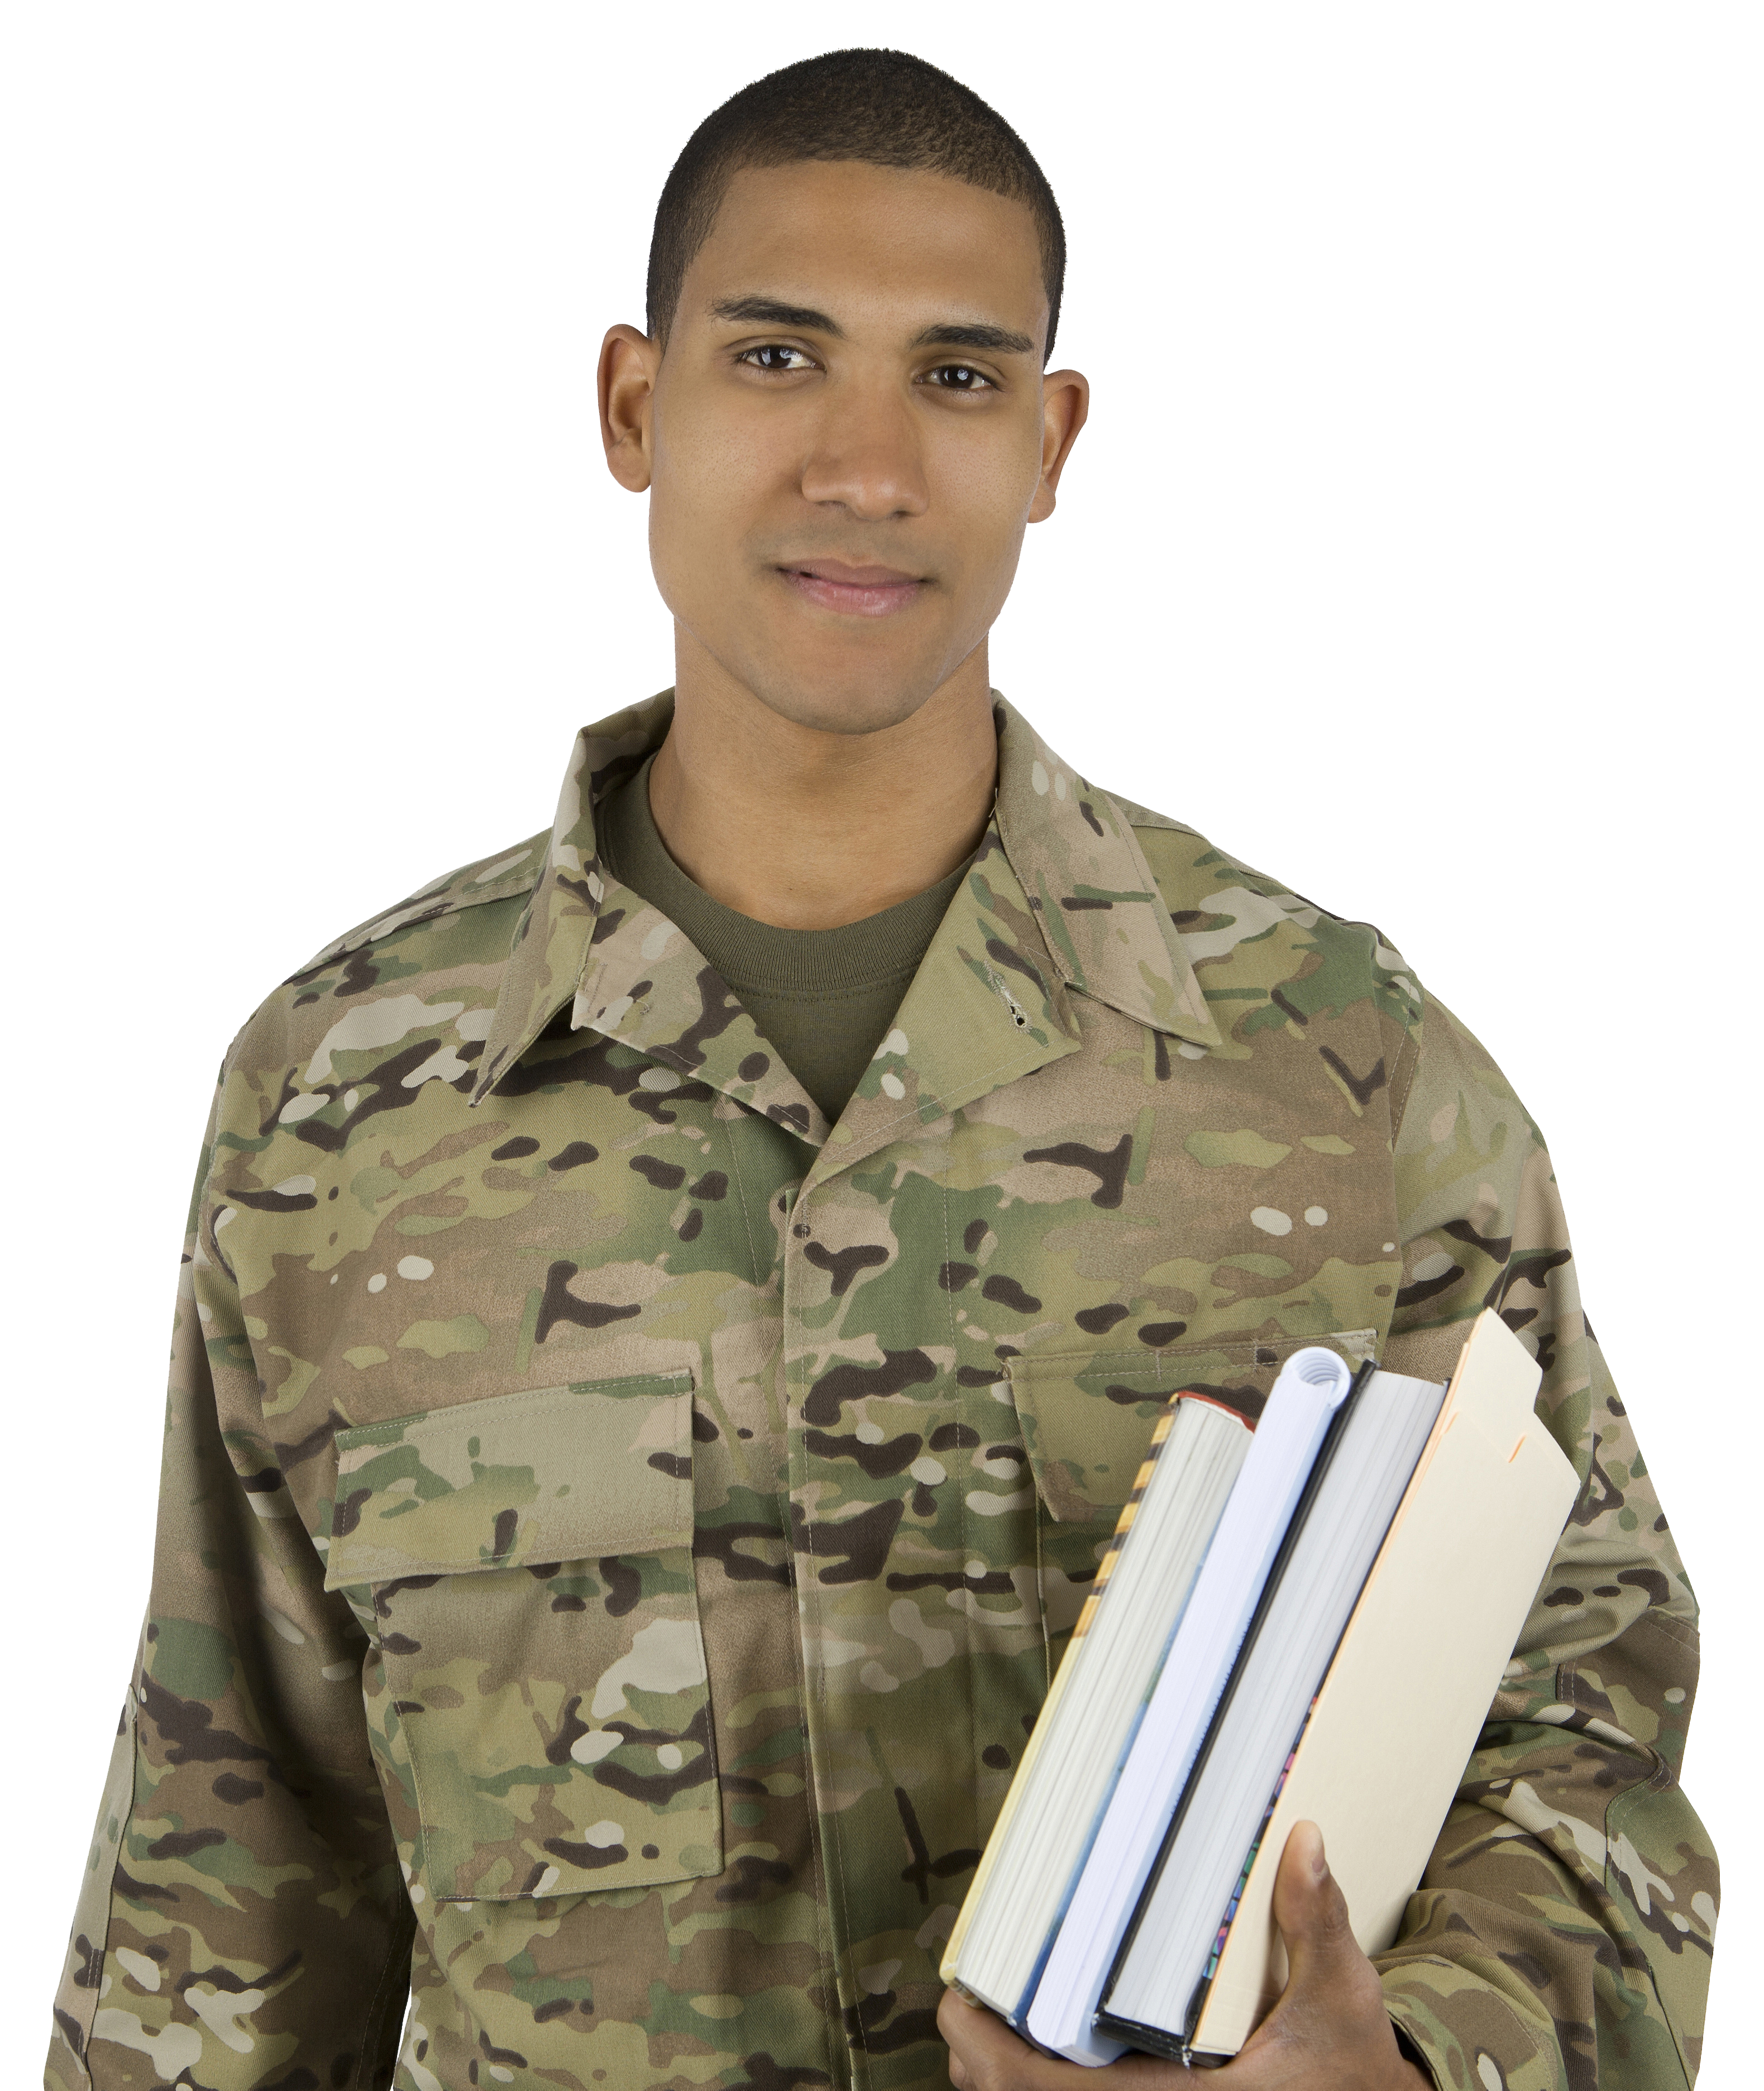 Military student holding textbooks